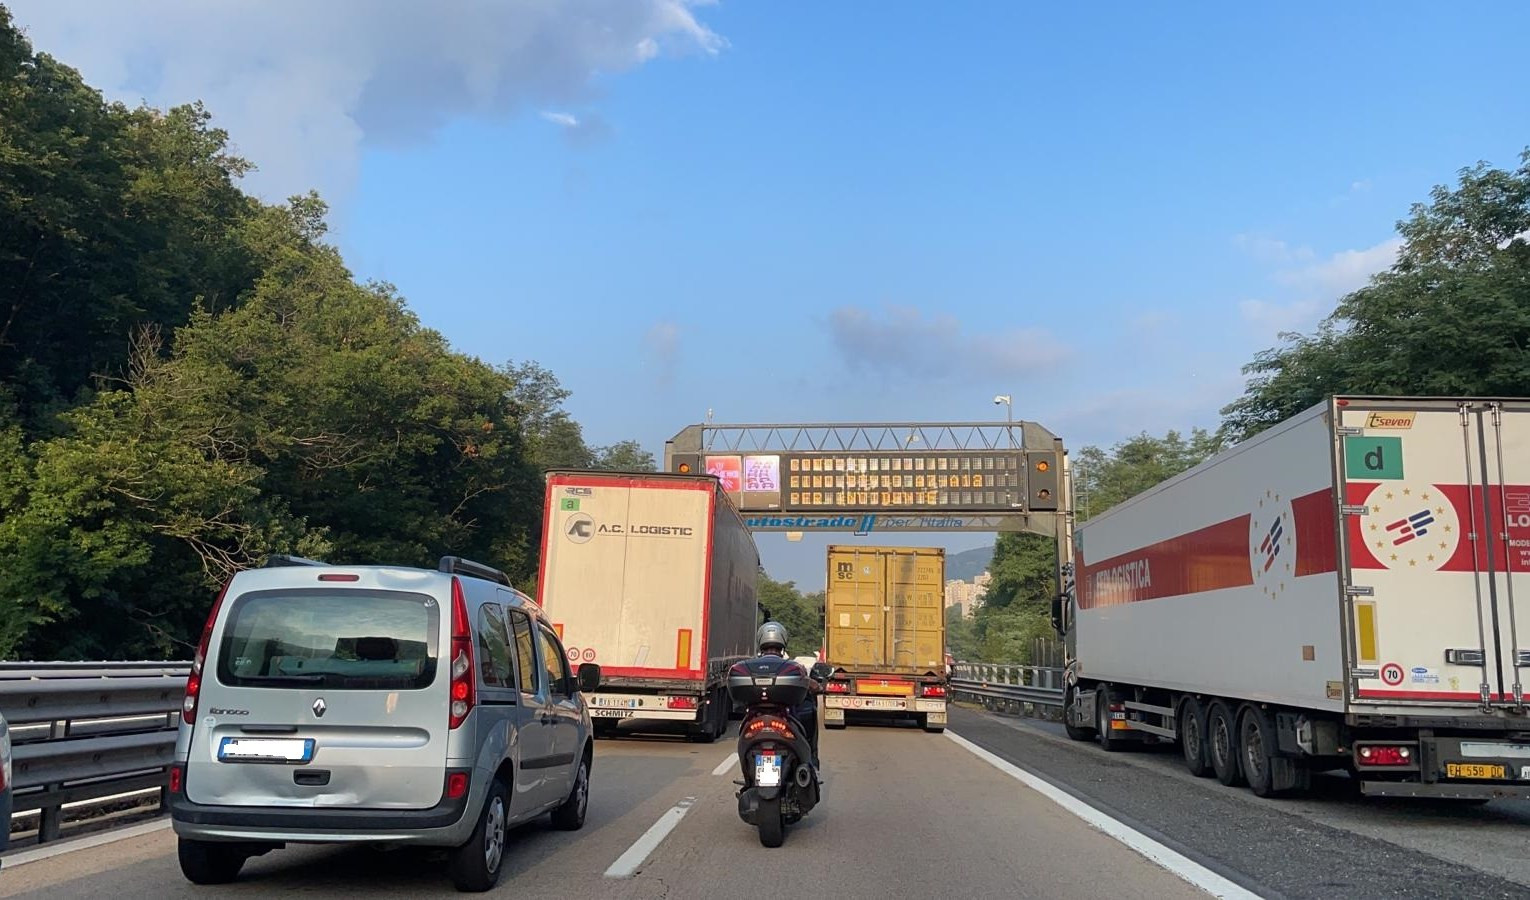 Caos autostrade, corsia unica tra Genova Est e Nervi per ritardi